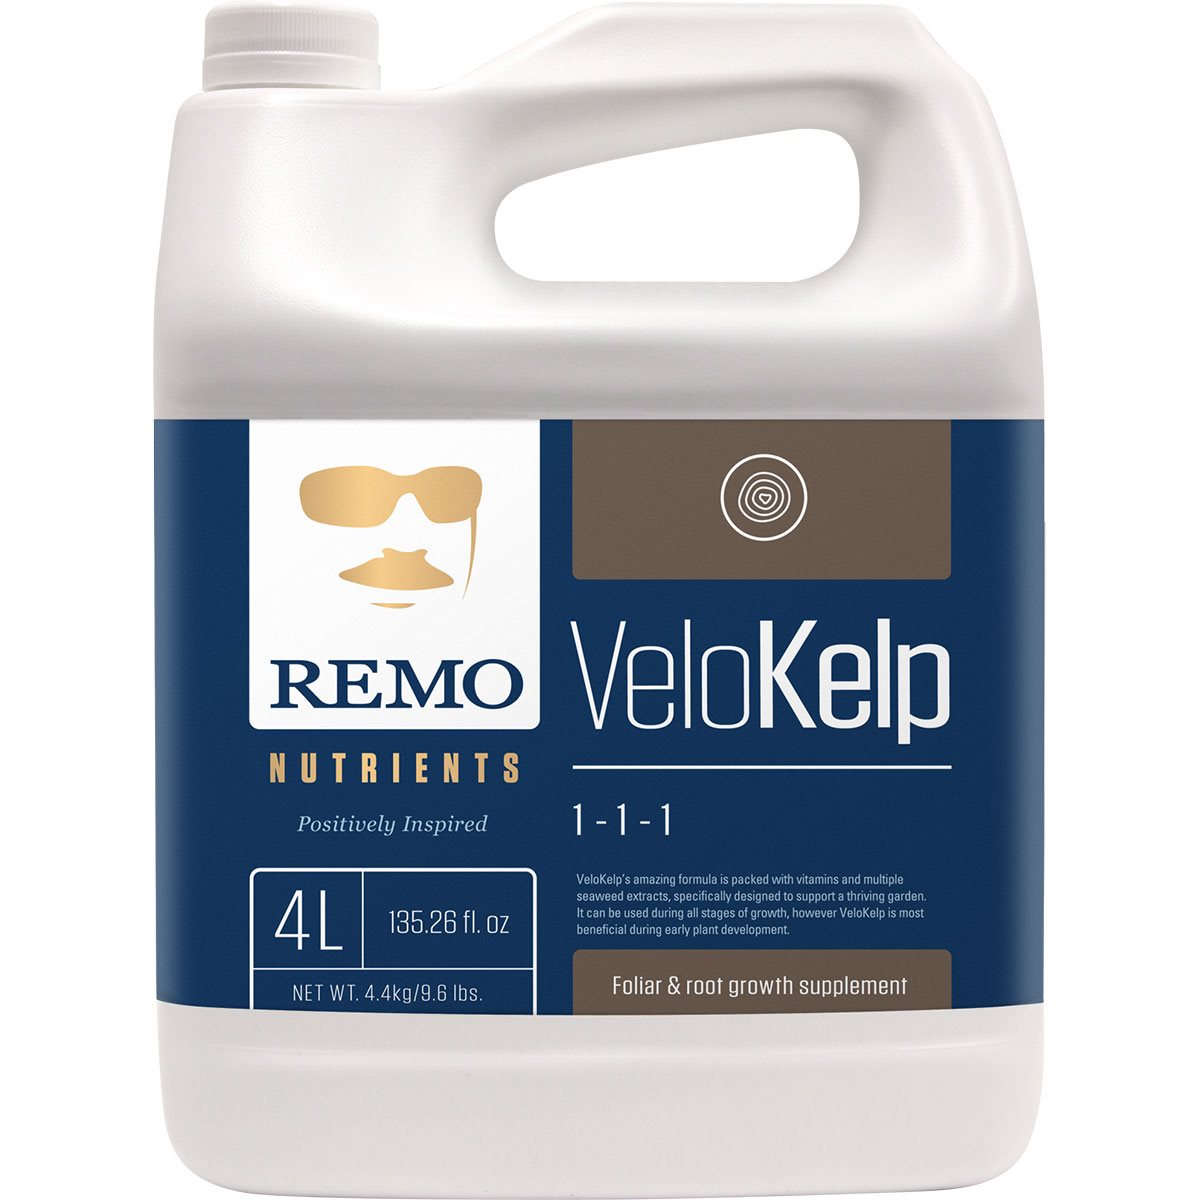 Remo Nutrients VeloKelp - Nutrients